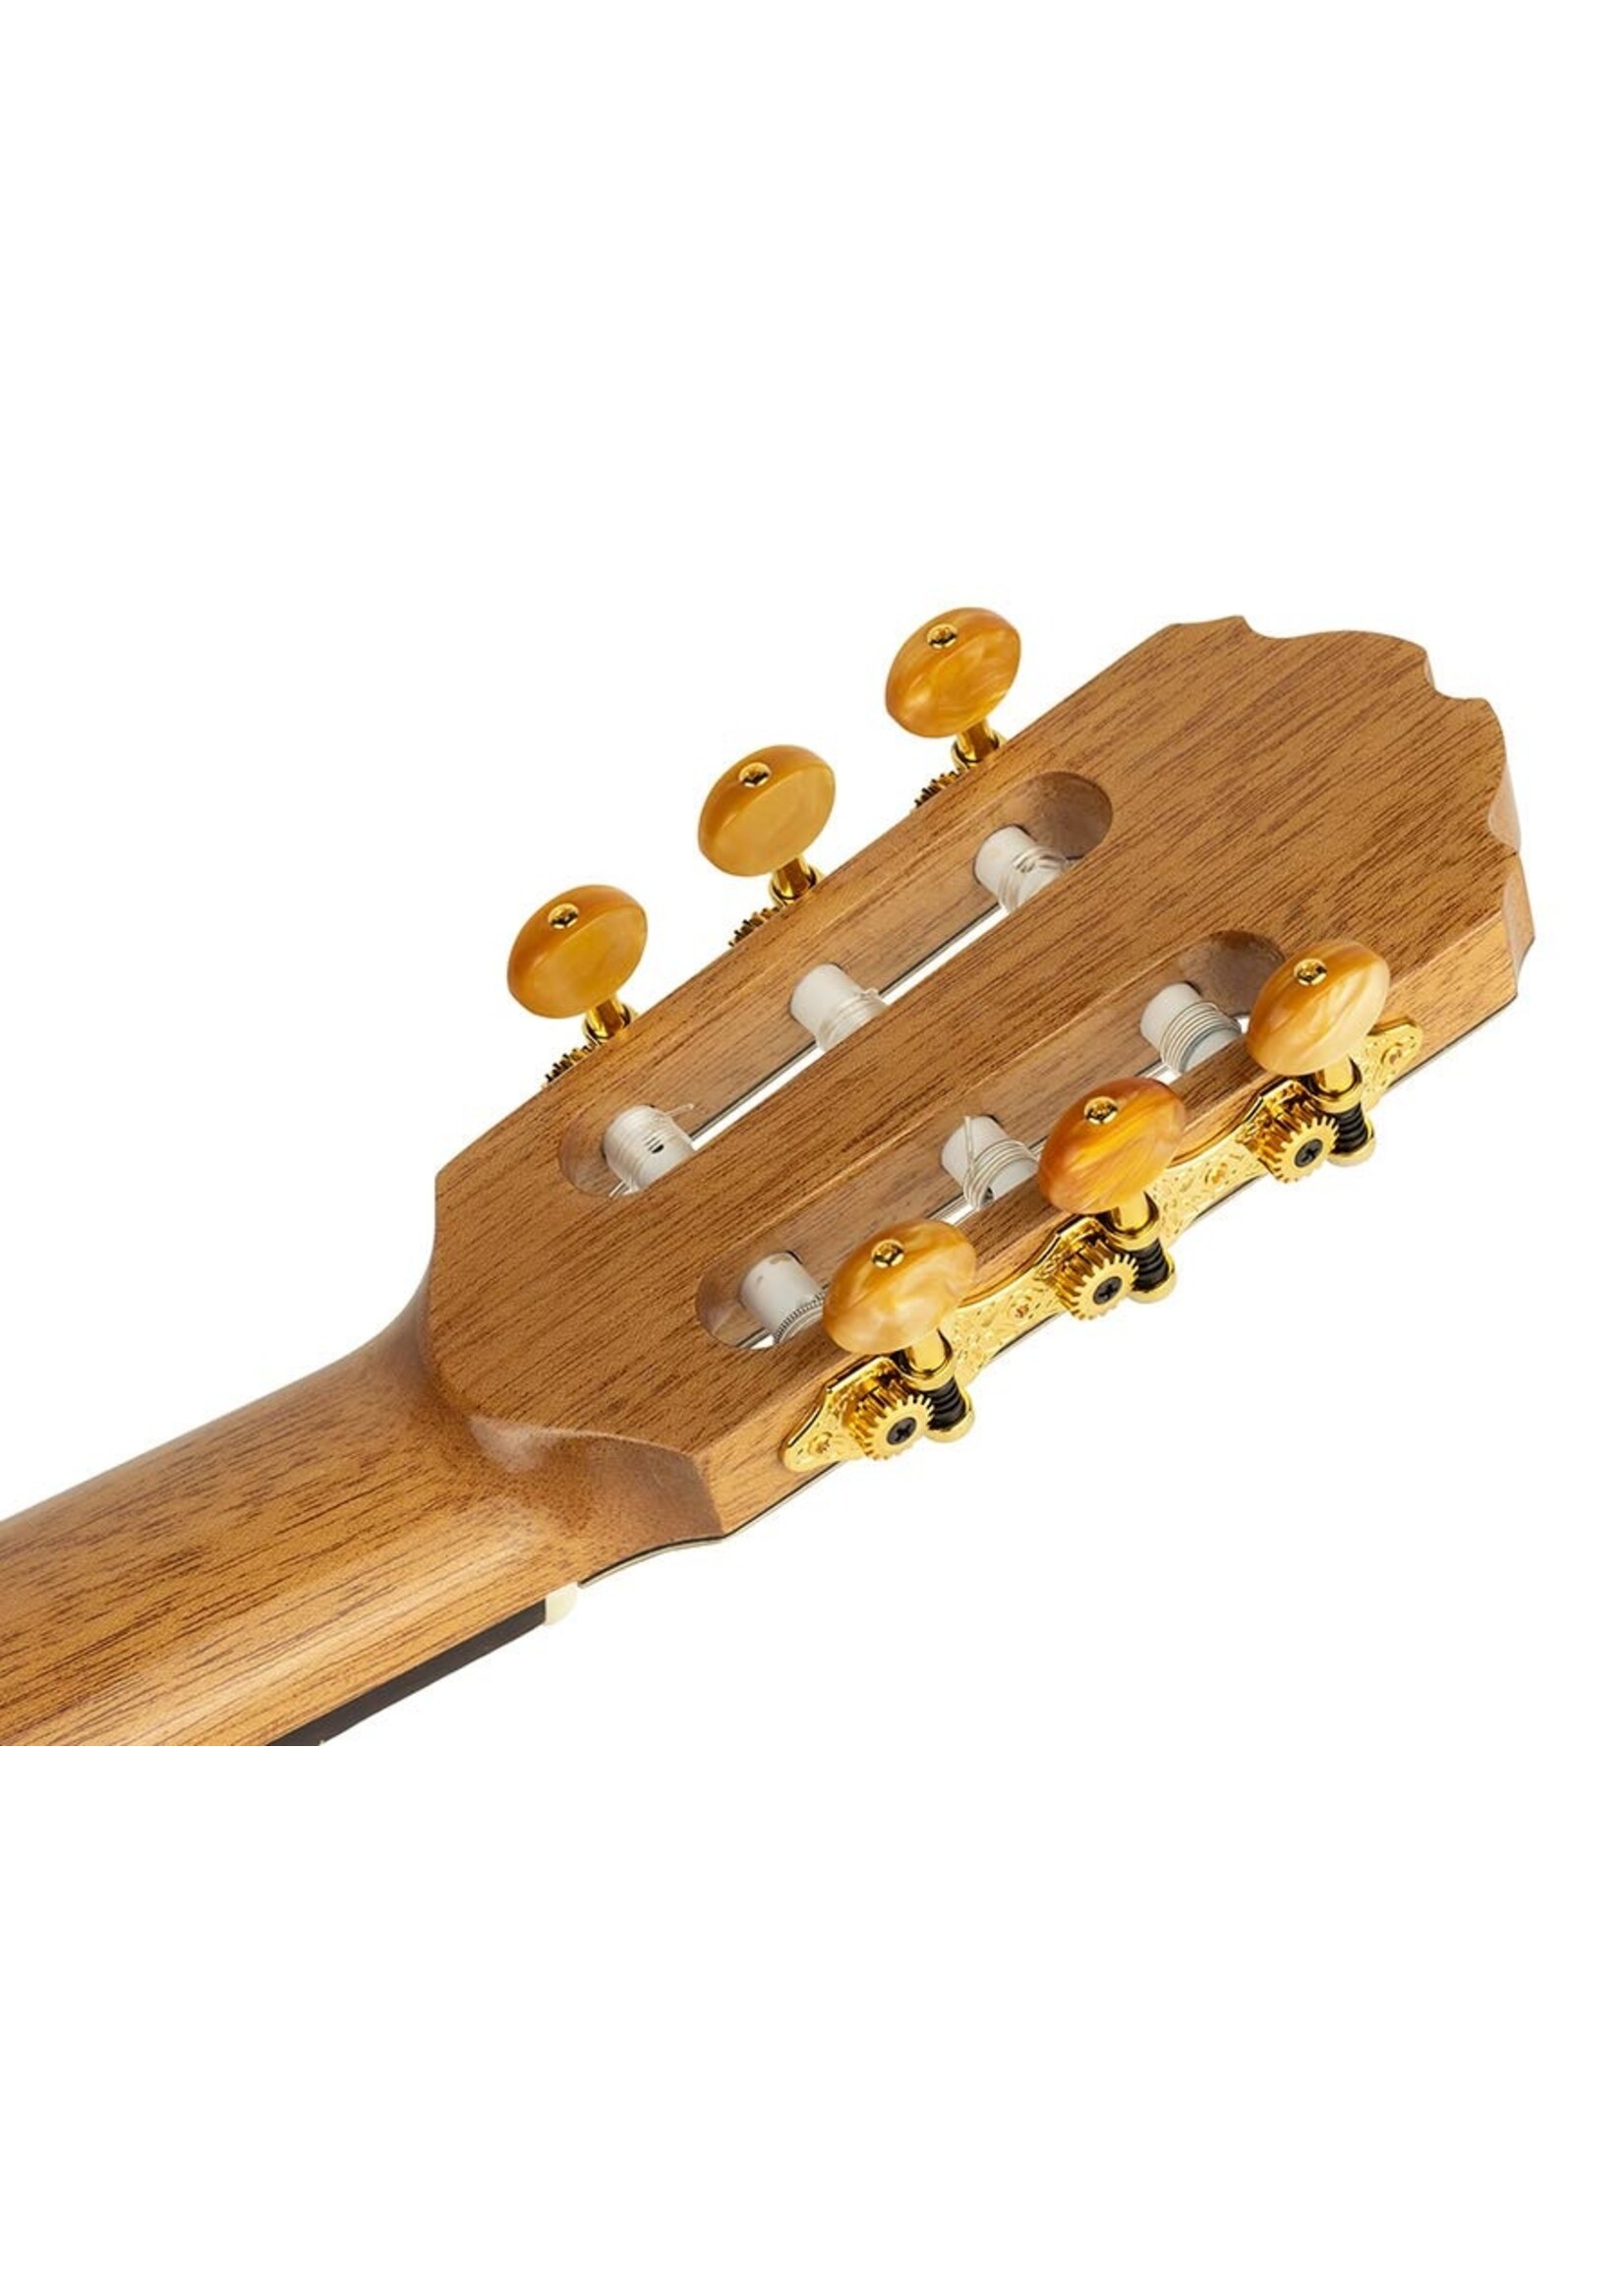 Kremona Kremona R65CW Kremona Soloist Series classic guitar solid spruce and walnut